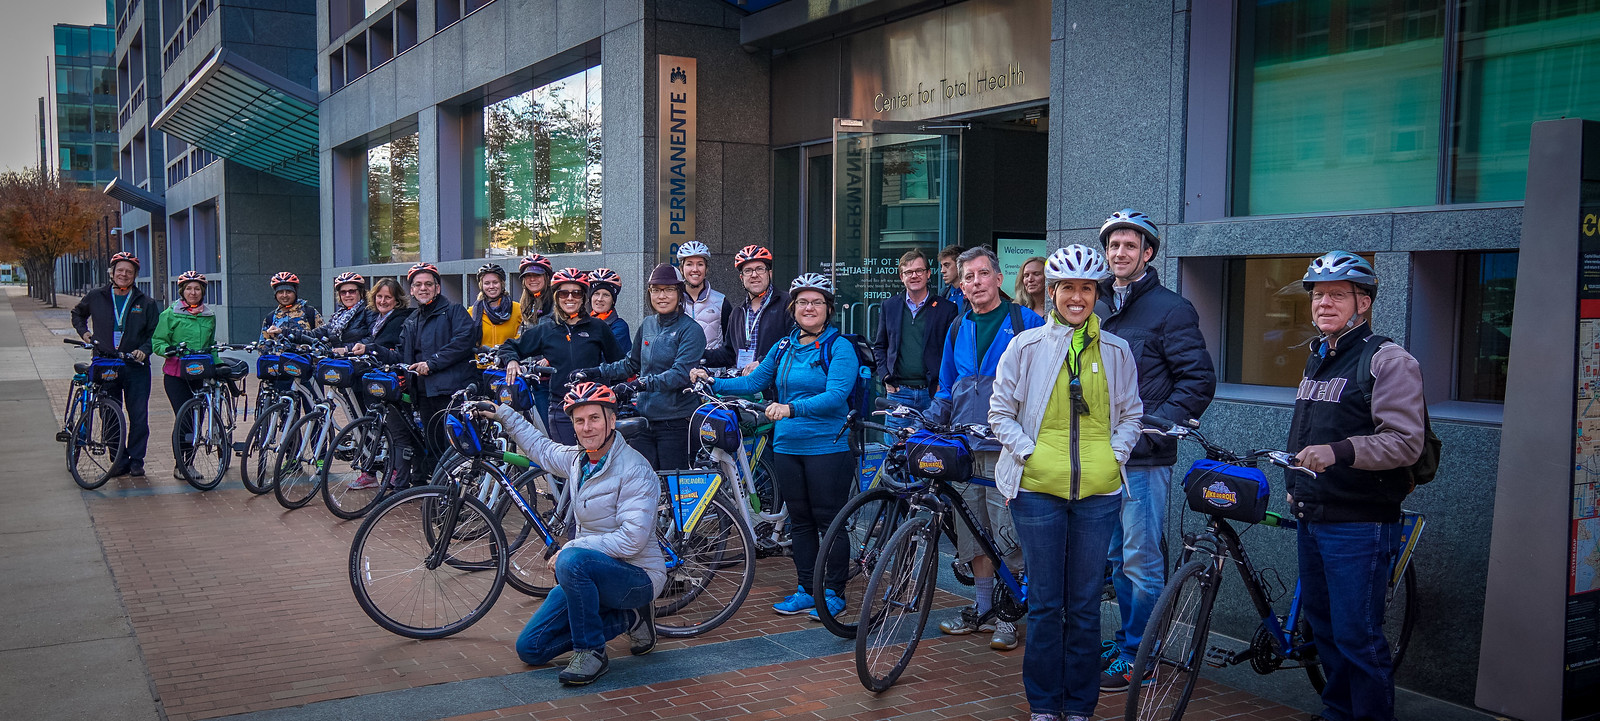 2015 Greenbuild Tour Bike DC- Transit, Health, and Gardens Kaiser Permanente Center for Total Health  00238